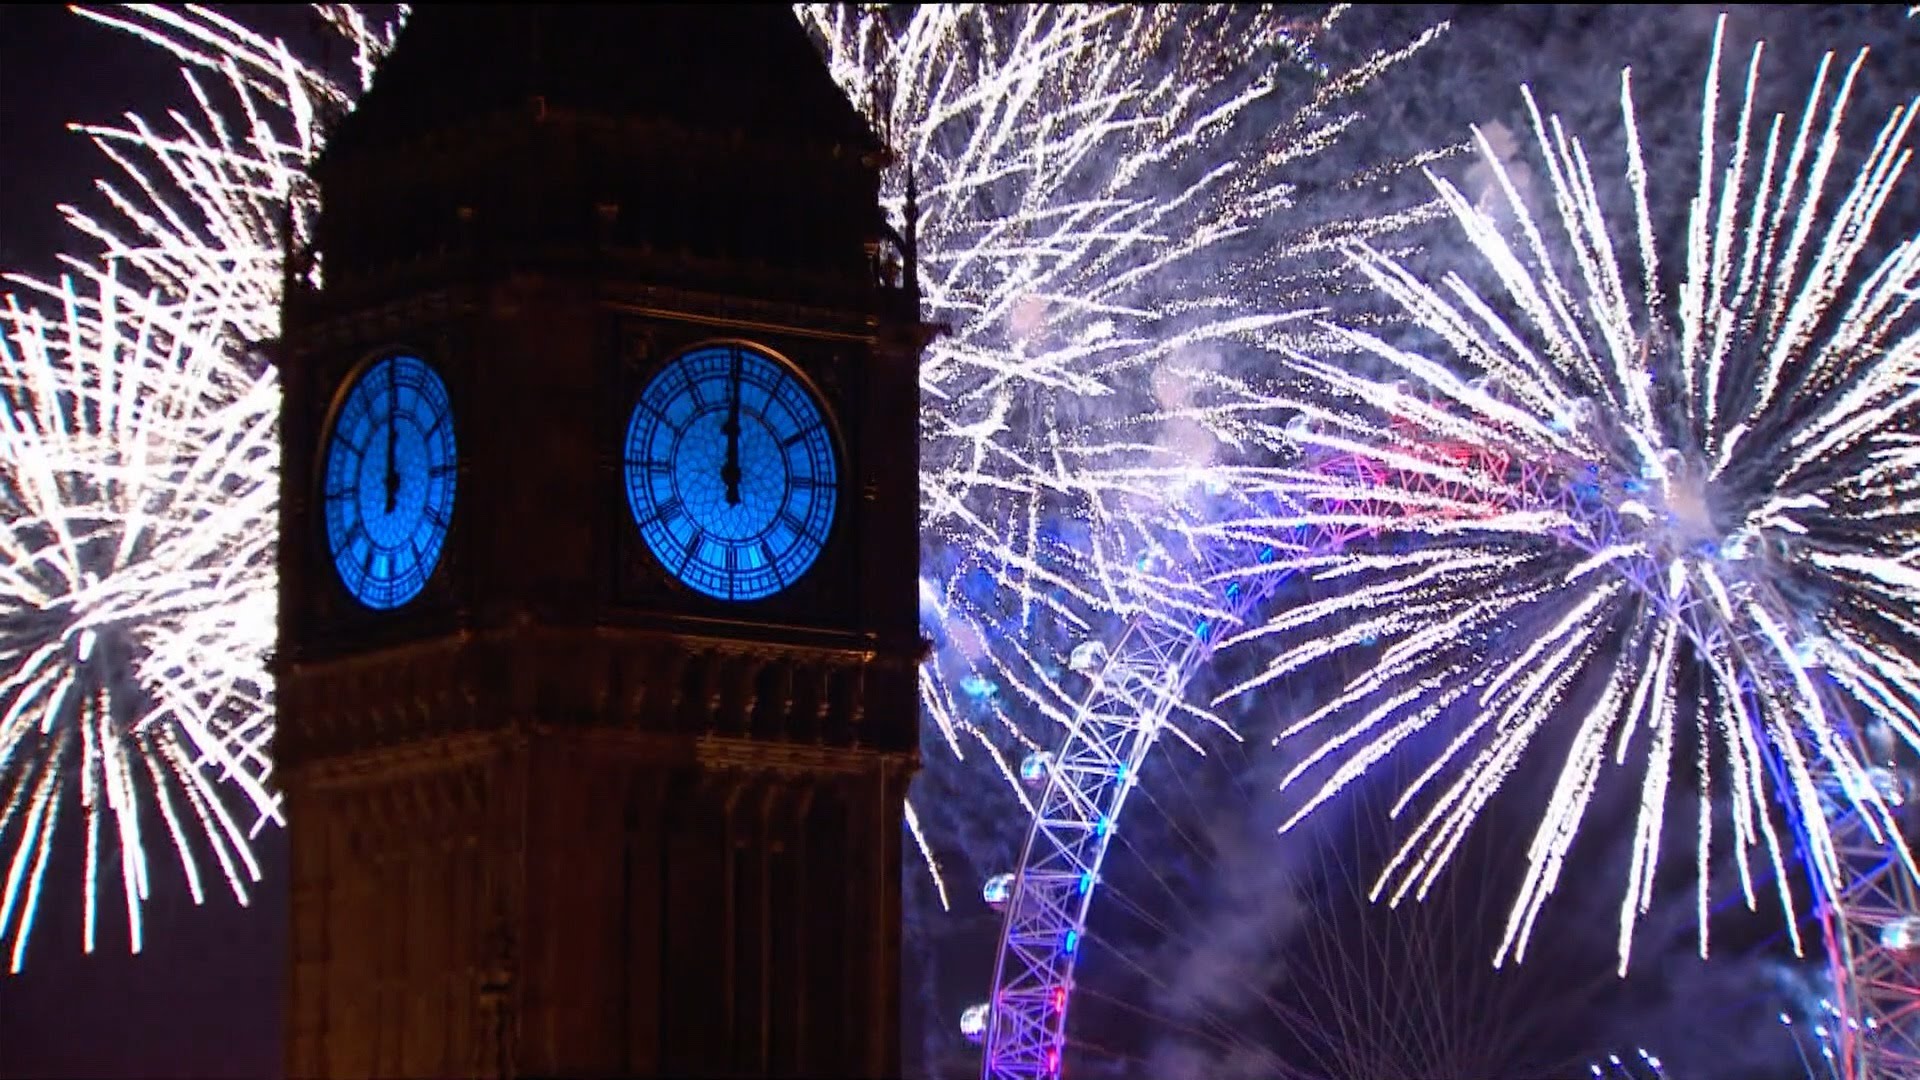 London Fireworks 2016 - New Year's Eve Fireworks - BBC One - YouTube